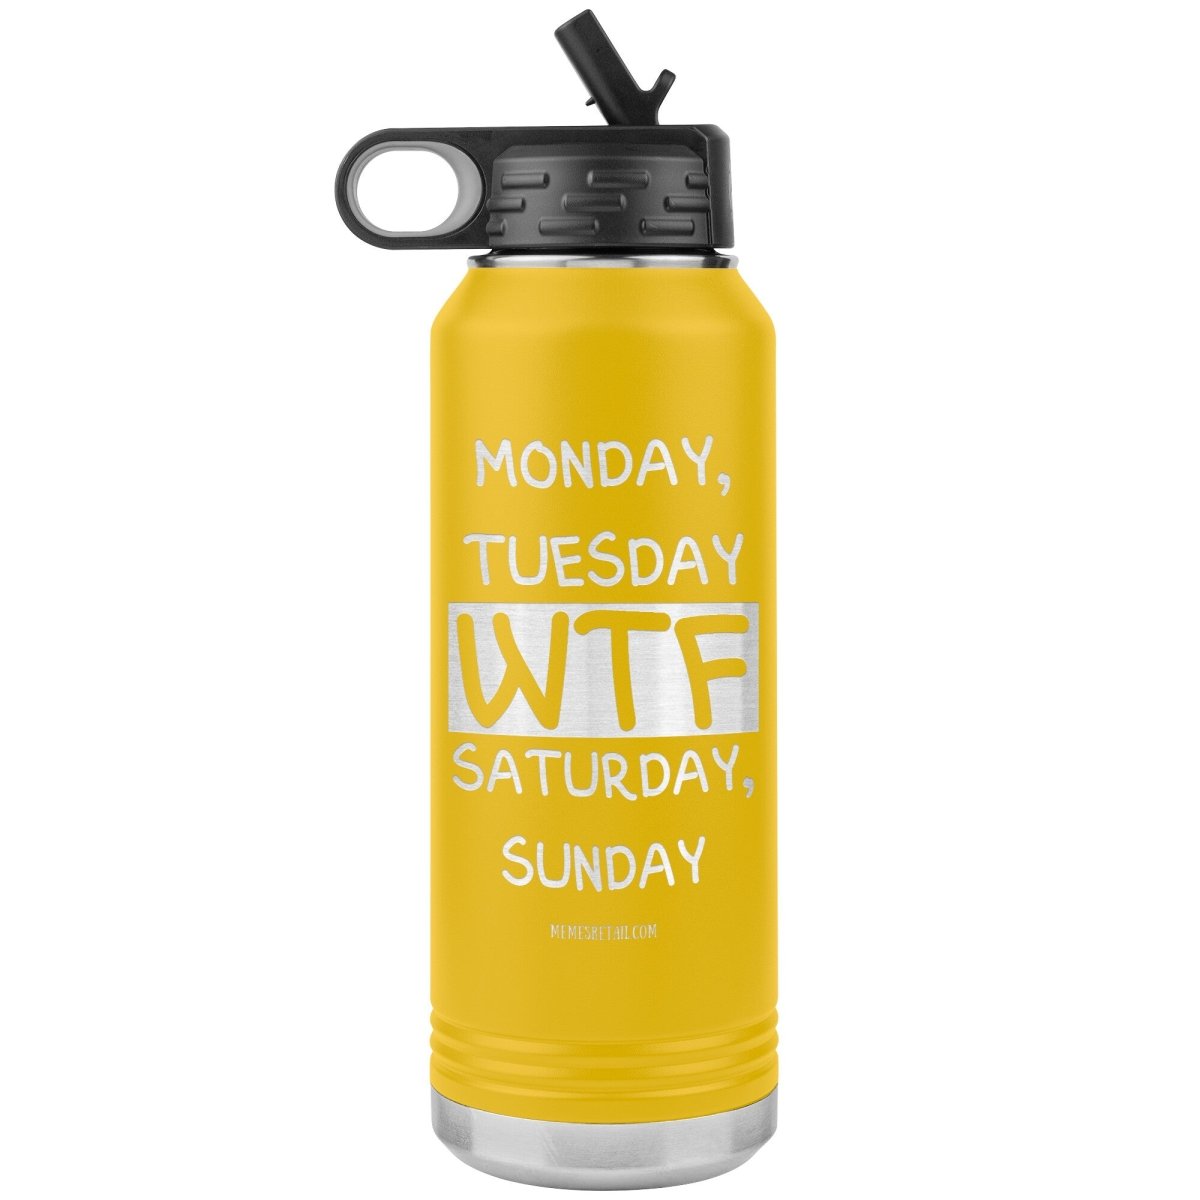 Monday, Tuesday, WTF, Saturday, Sunday 32 oz Water Tumbler, Yellow - MemesRetail.com